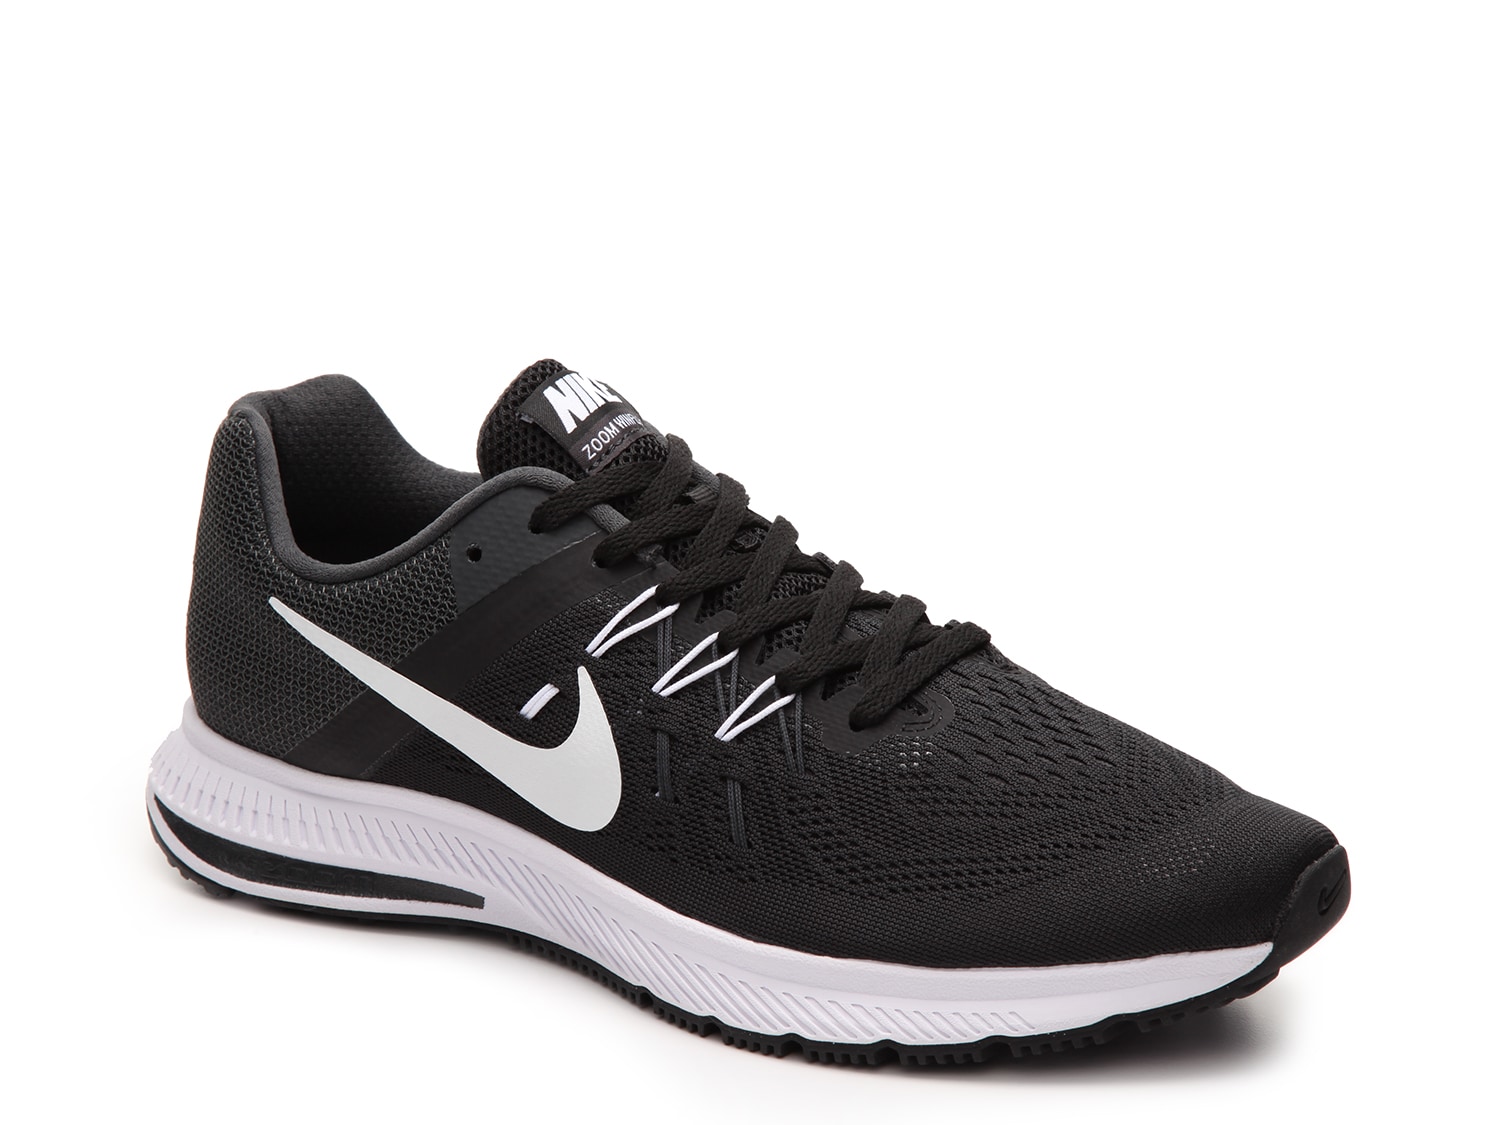 Nike Zoom Winflo 2 Lightweight Running Shoe - Men's - Free Shipping